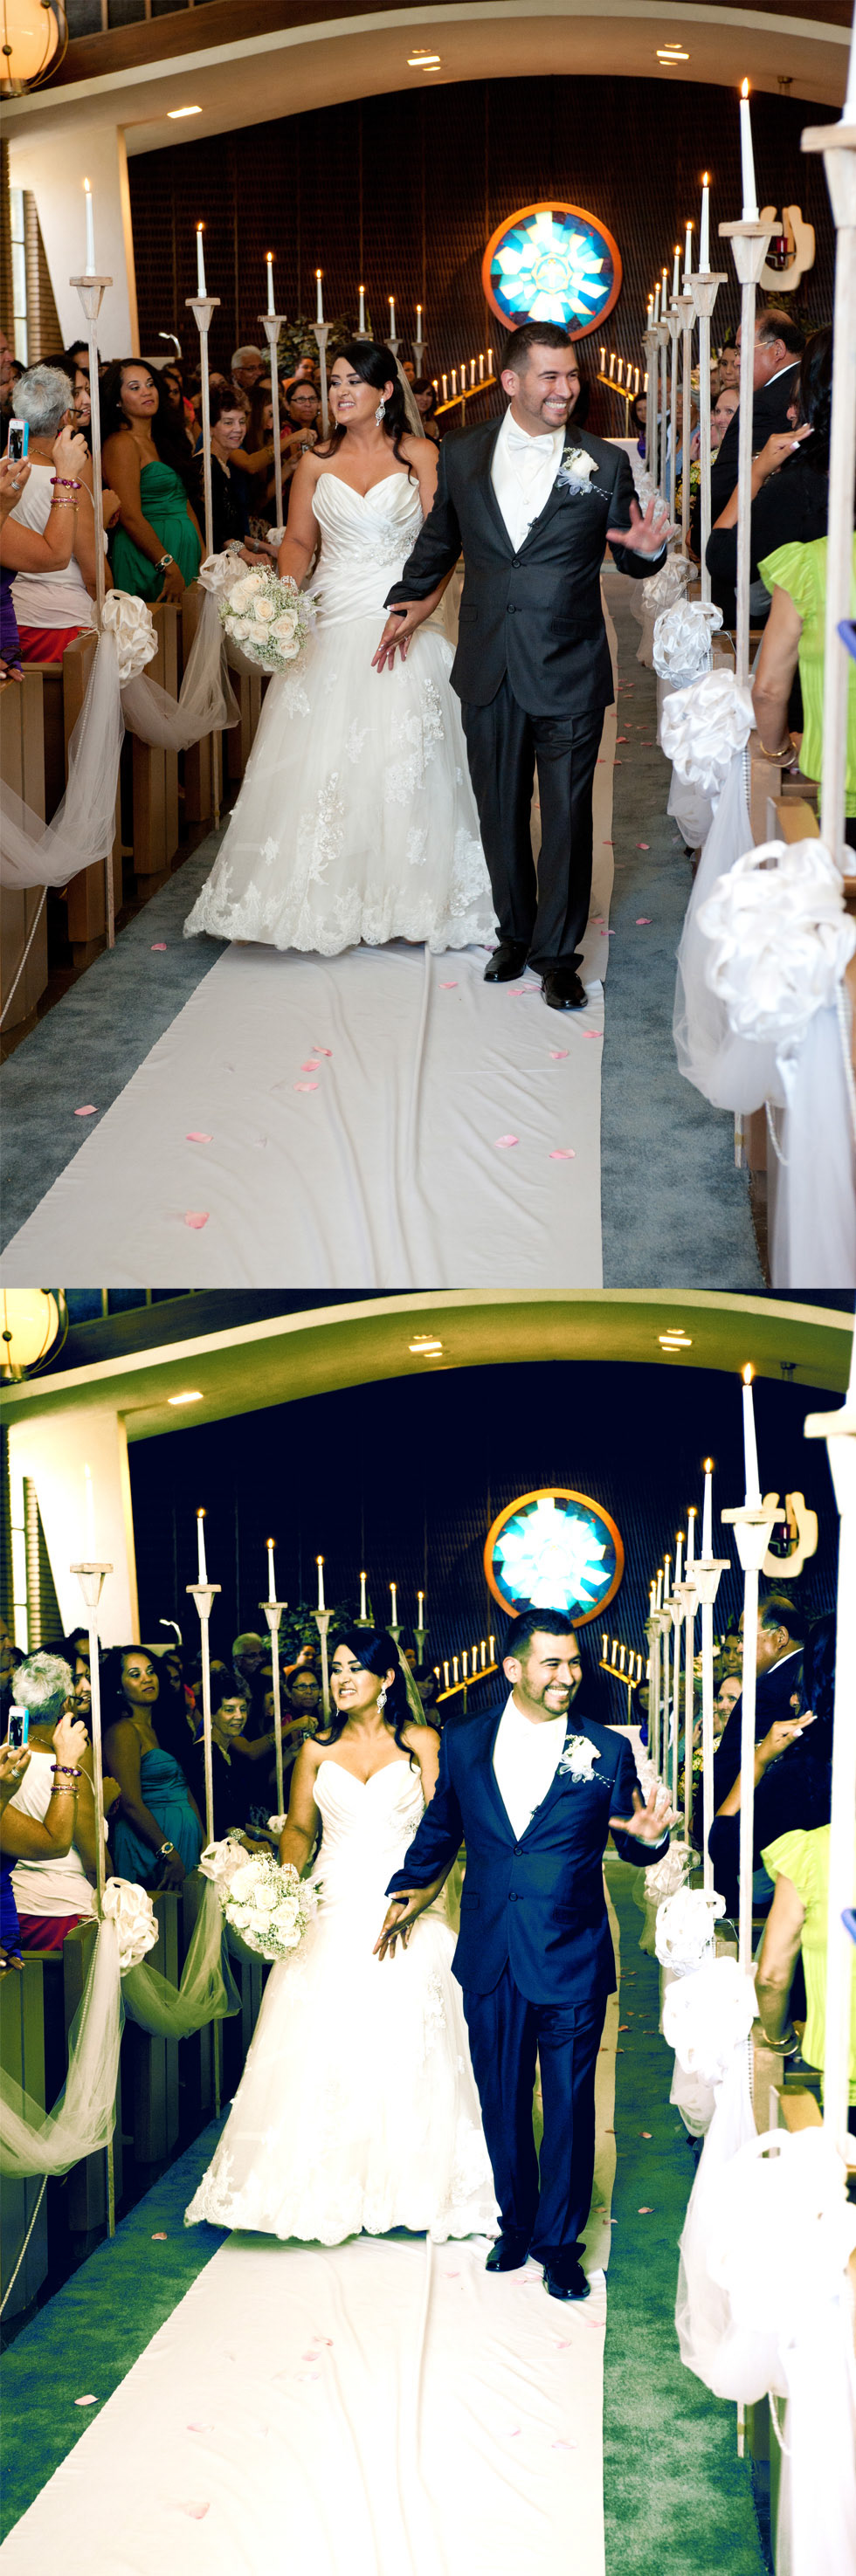 wedding photo shoot edit design Love